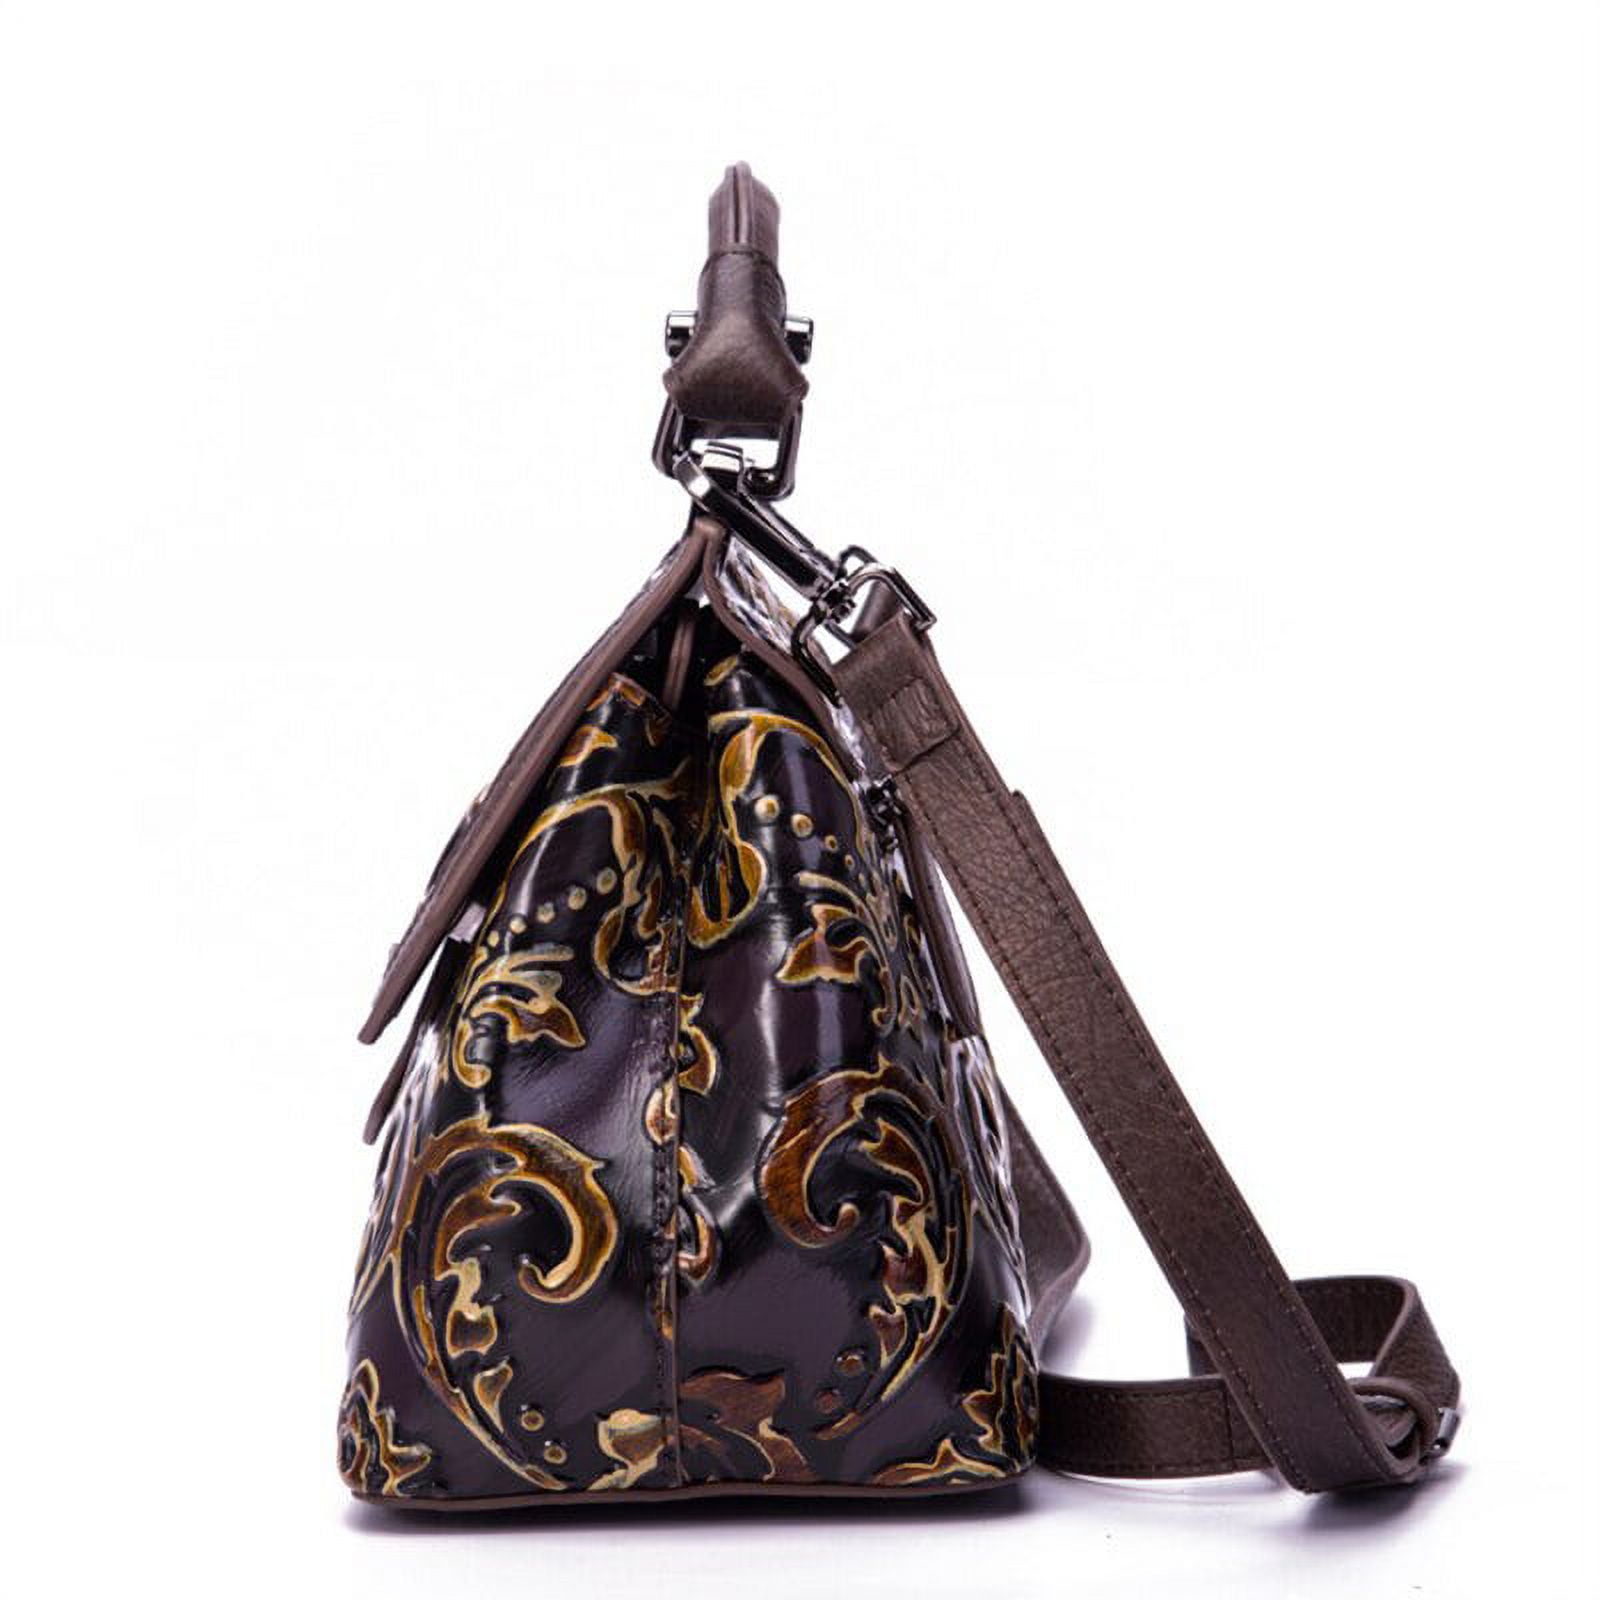 Pikadingnis Retro Handbag for Women Genuine Leather Tote Bag Large Capacity Shoulder Bag Magnetic Clasp Closure Crossbody Bag, Adult Unisex, Size